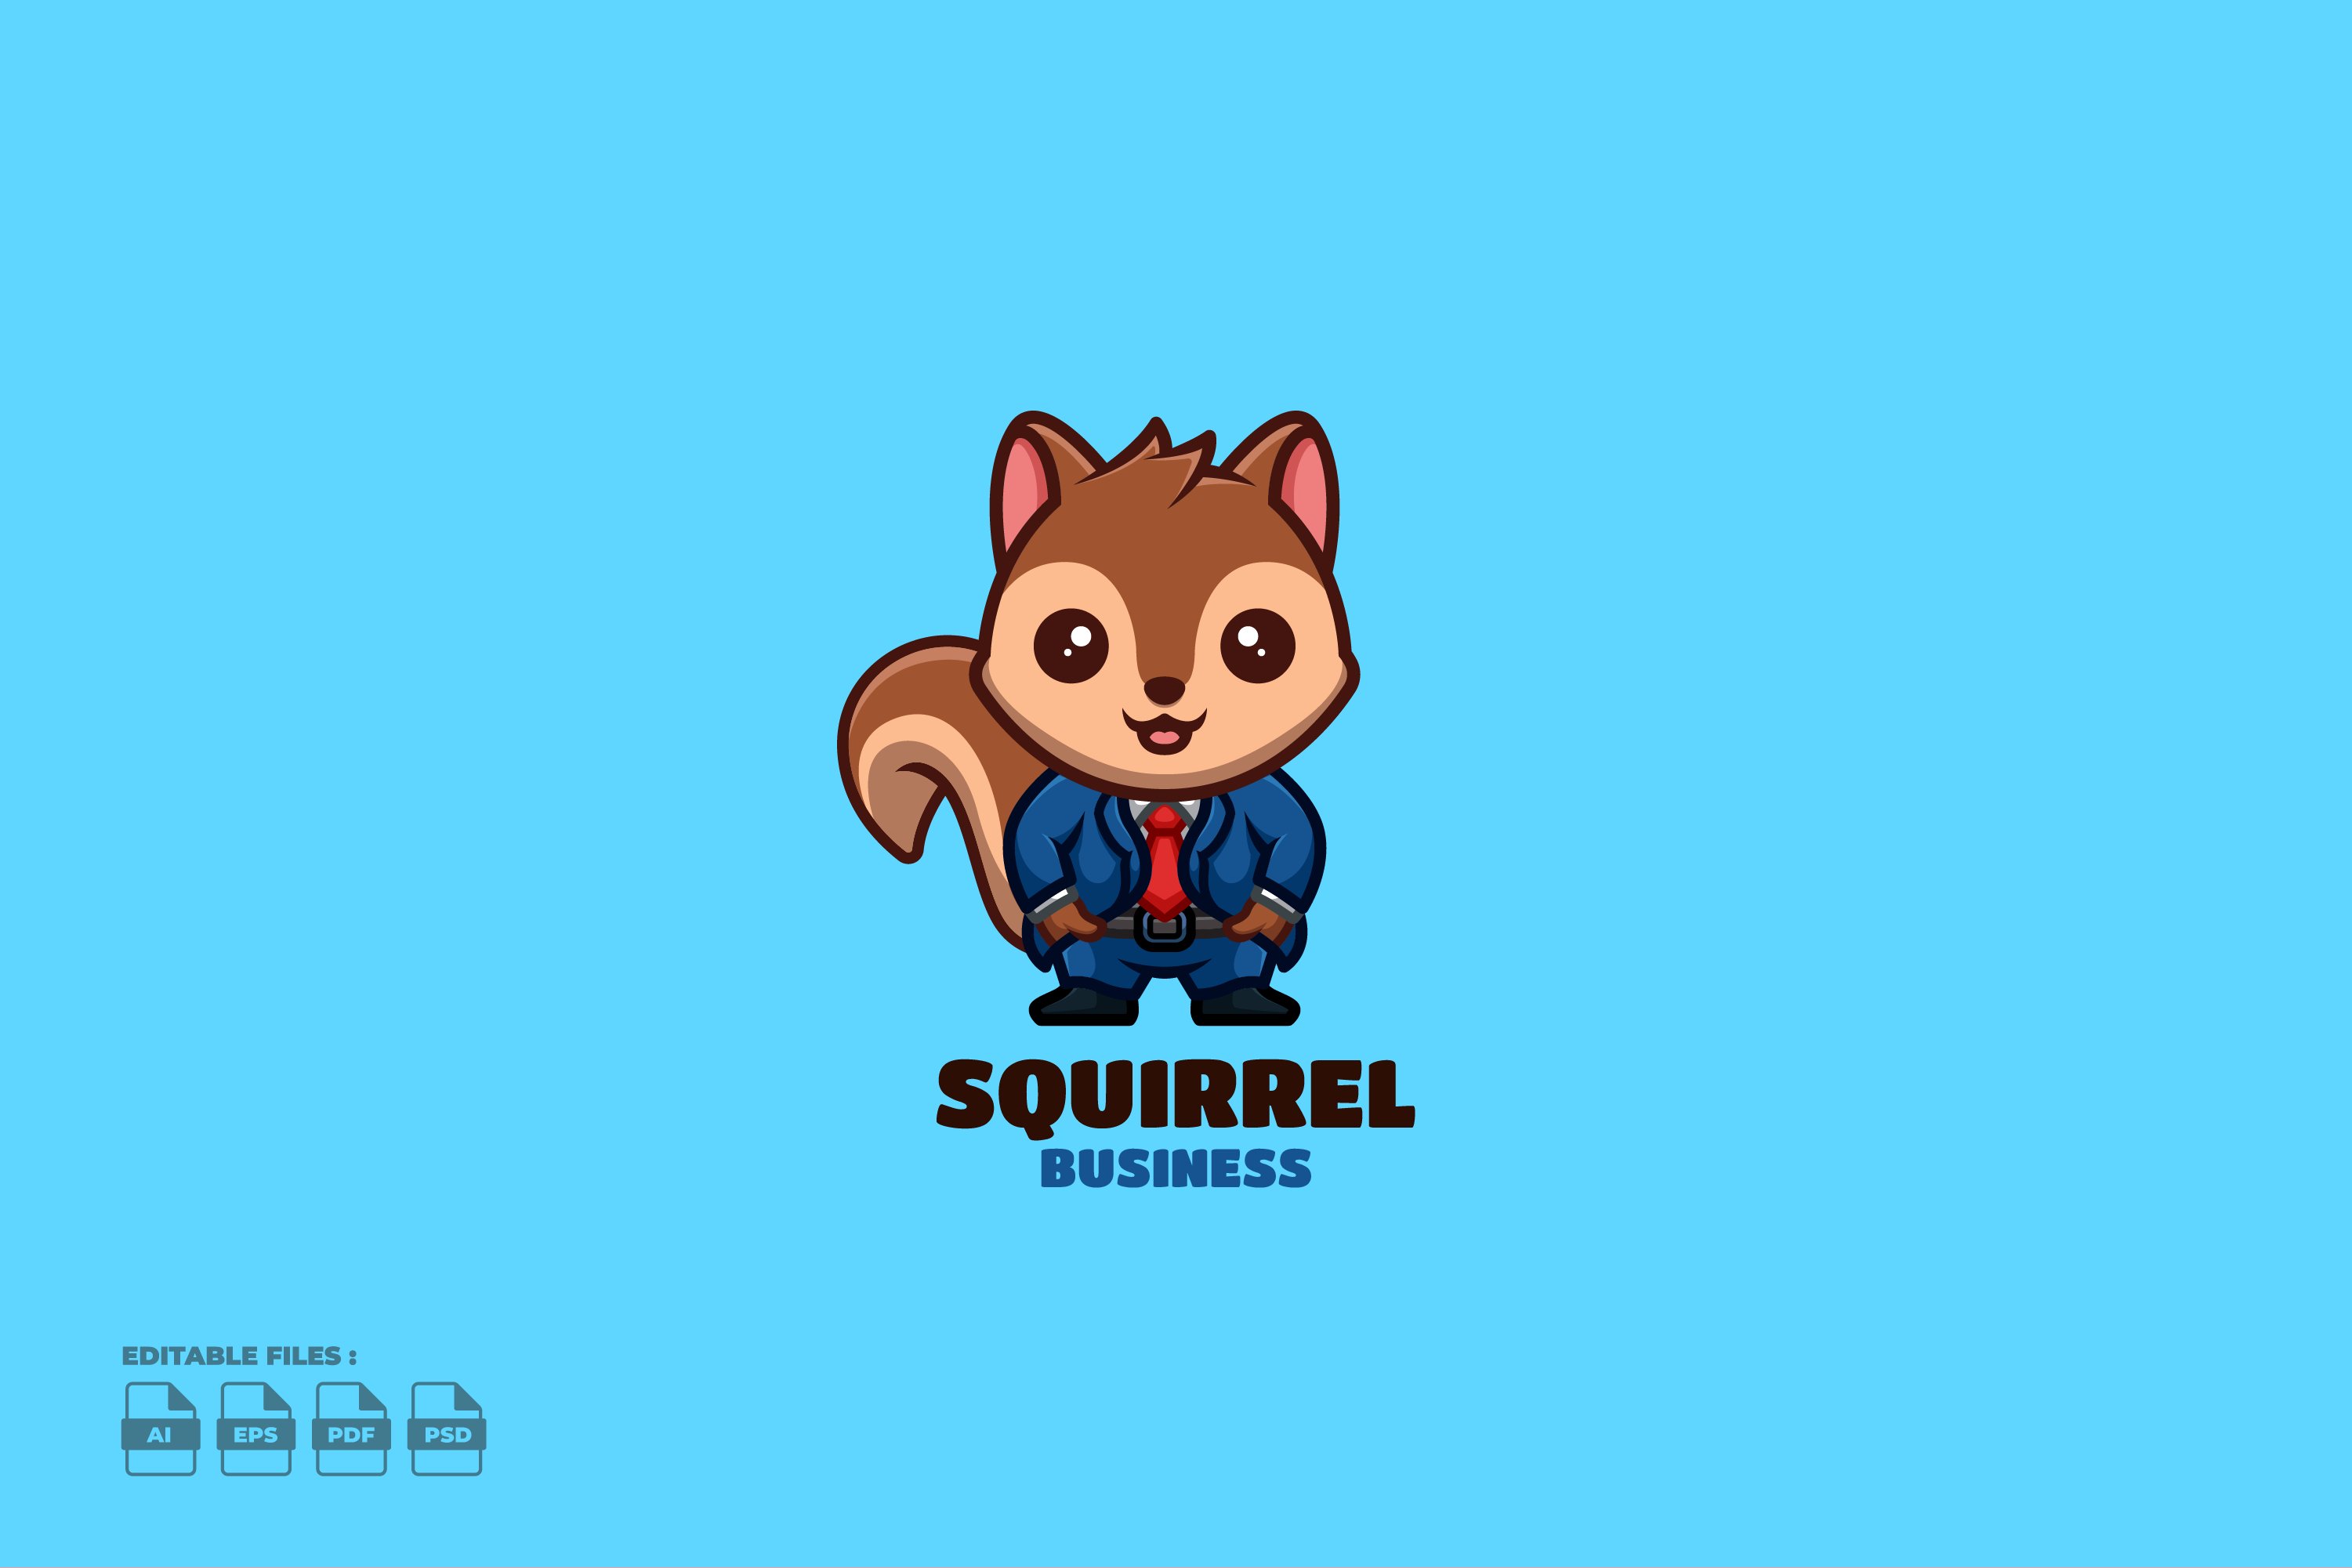 Business Squirrel Cute Mascot Logo cover image.